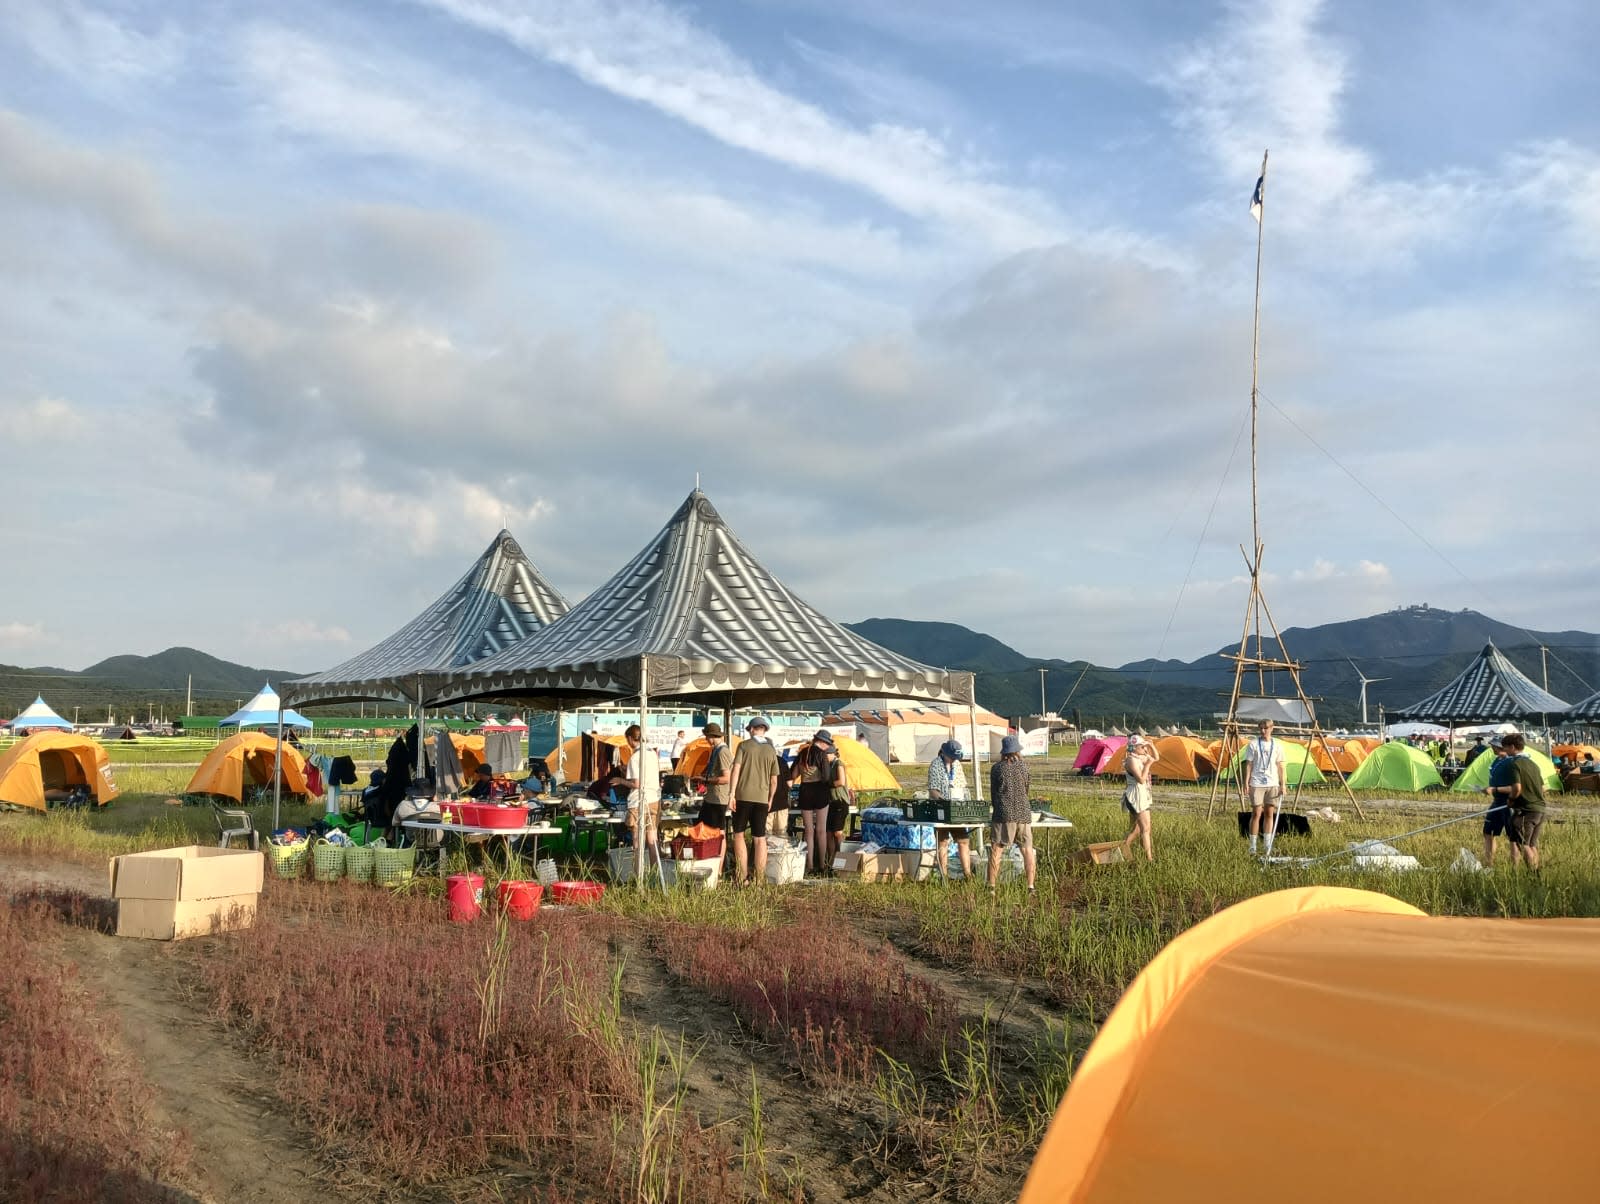 Finnische Späher verlassen Lager in Südkorea, da Taifun droht